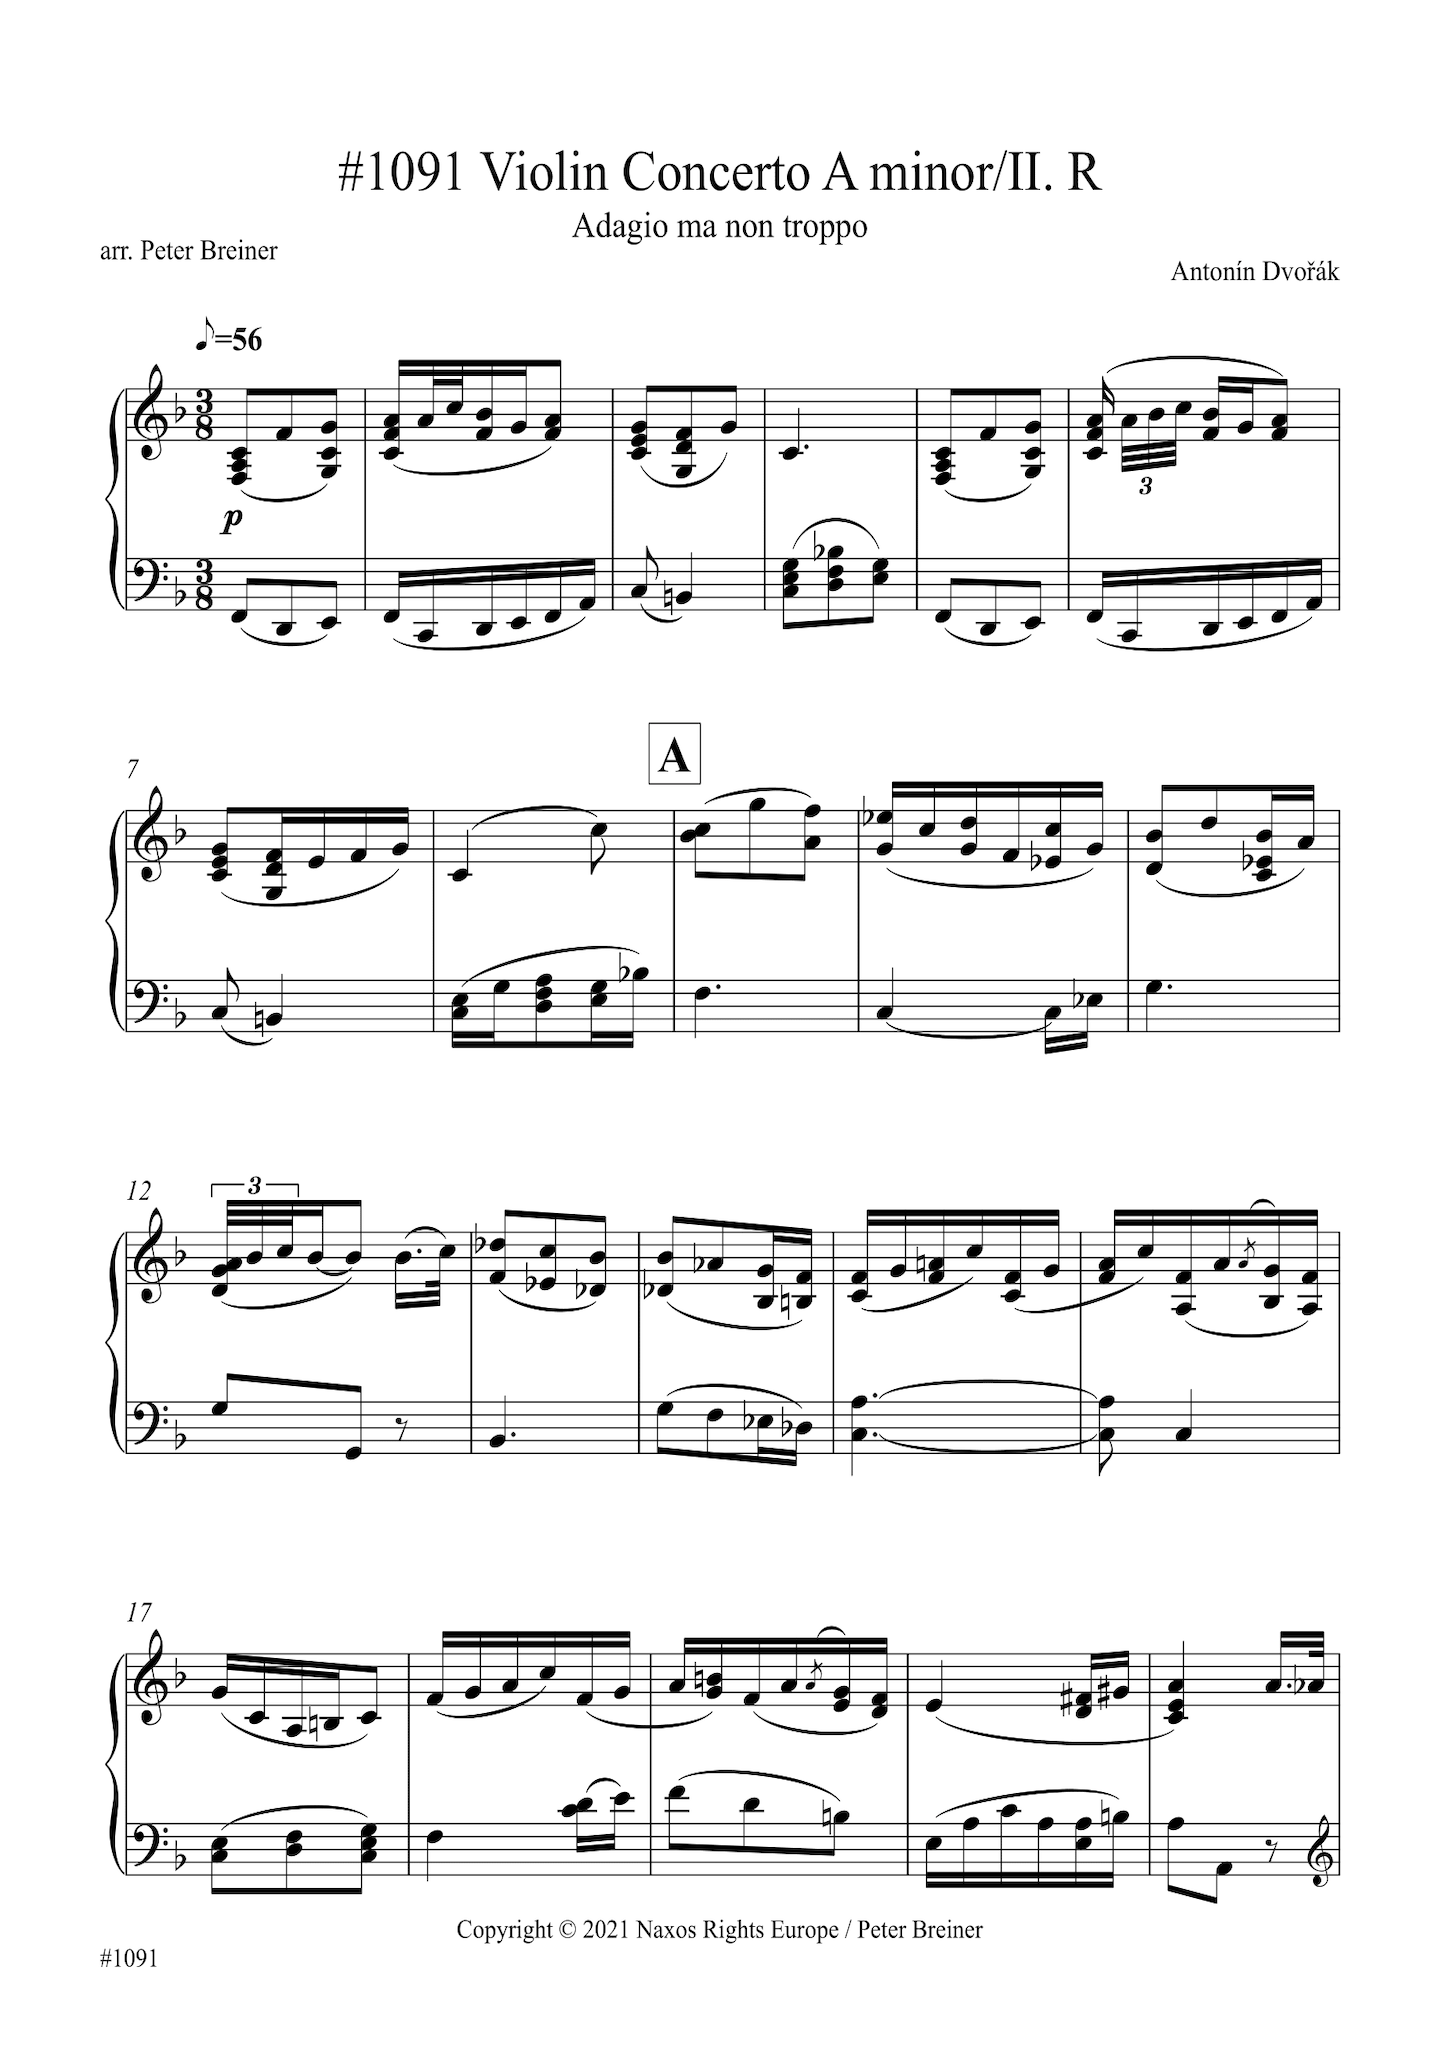 Antonín Dvořák: Adagio ma non troppo, Movt. II of Violin Concerto in A minor (arranged for piano by Peter Breiner) (PB173)